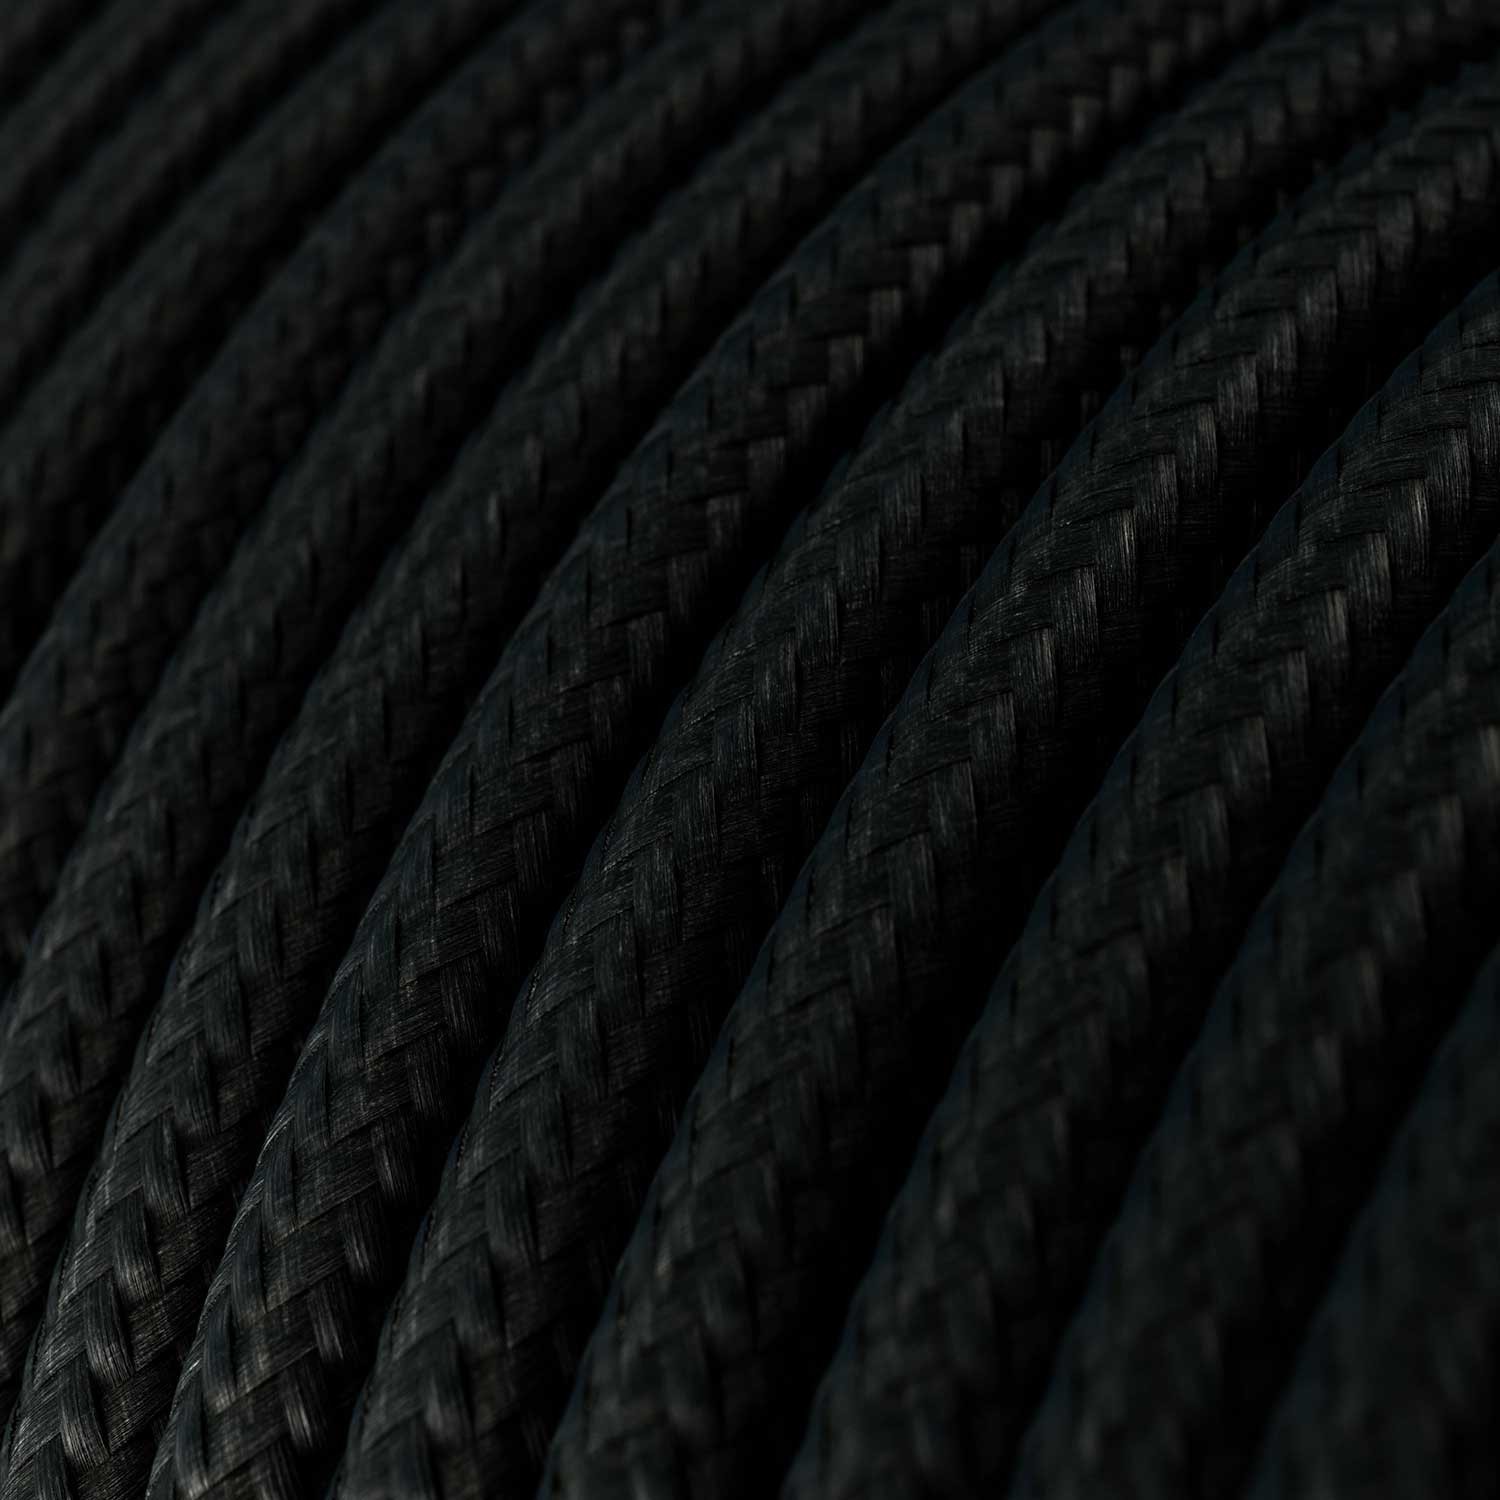 Cable eléctrico de silicona Ultra Soft recubierto de tejido Negro Carbón brillante - RM04 redondo 2x0.75mm